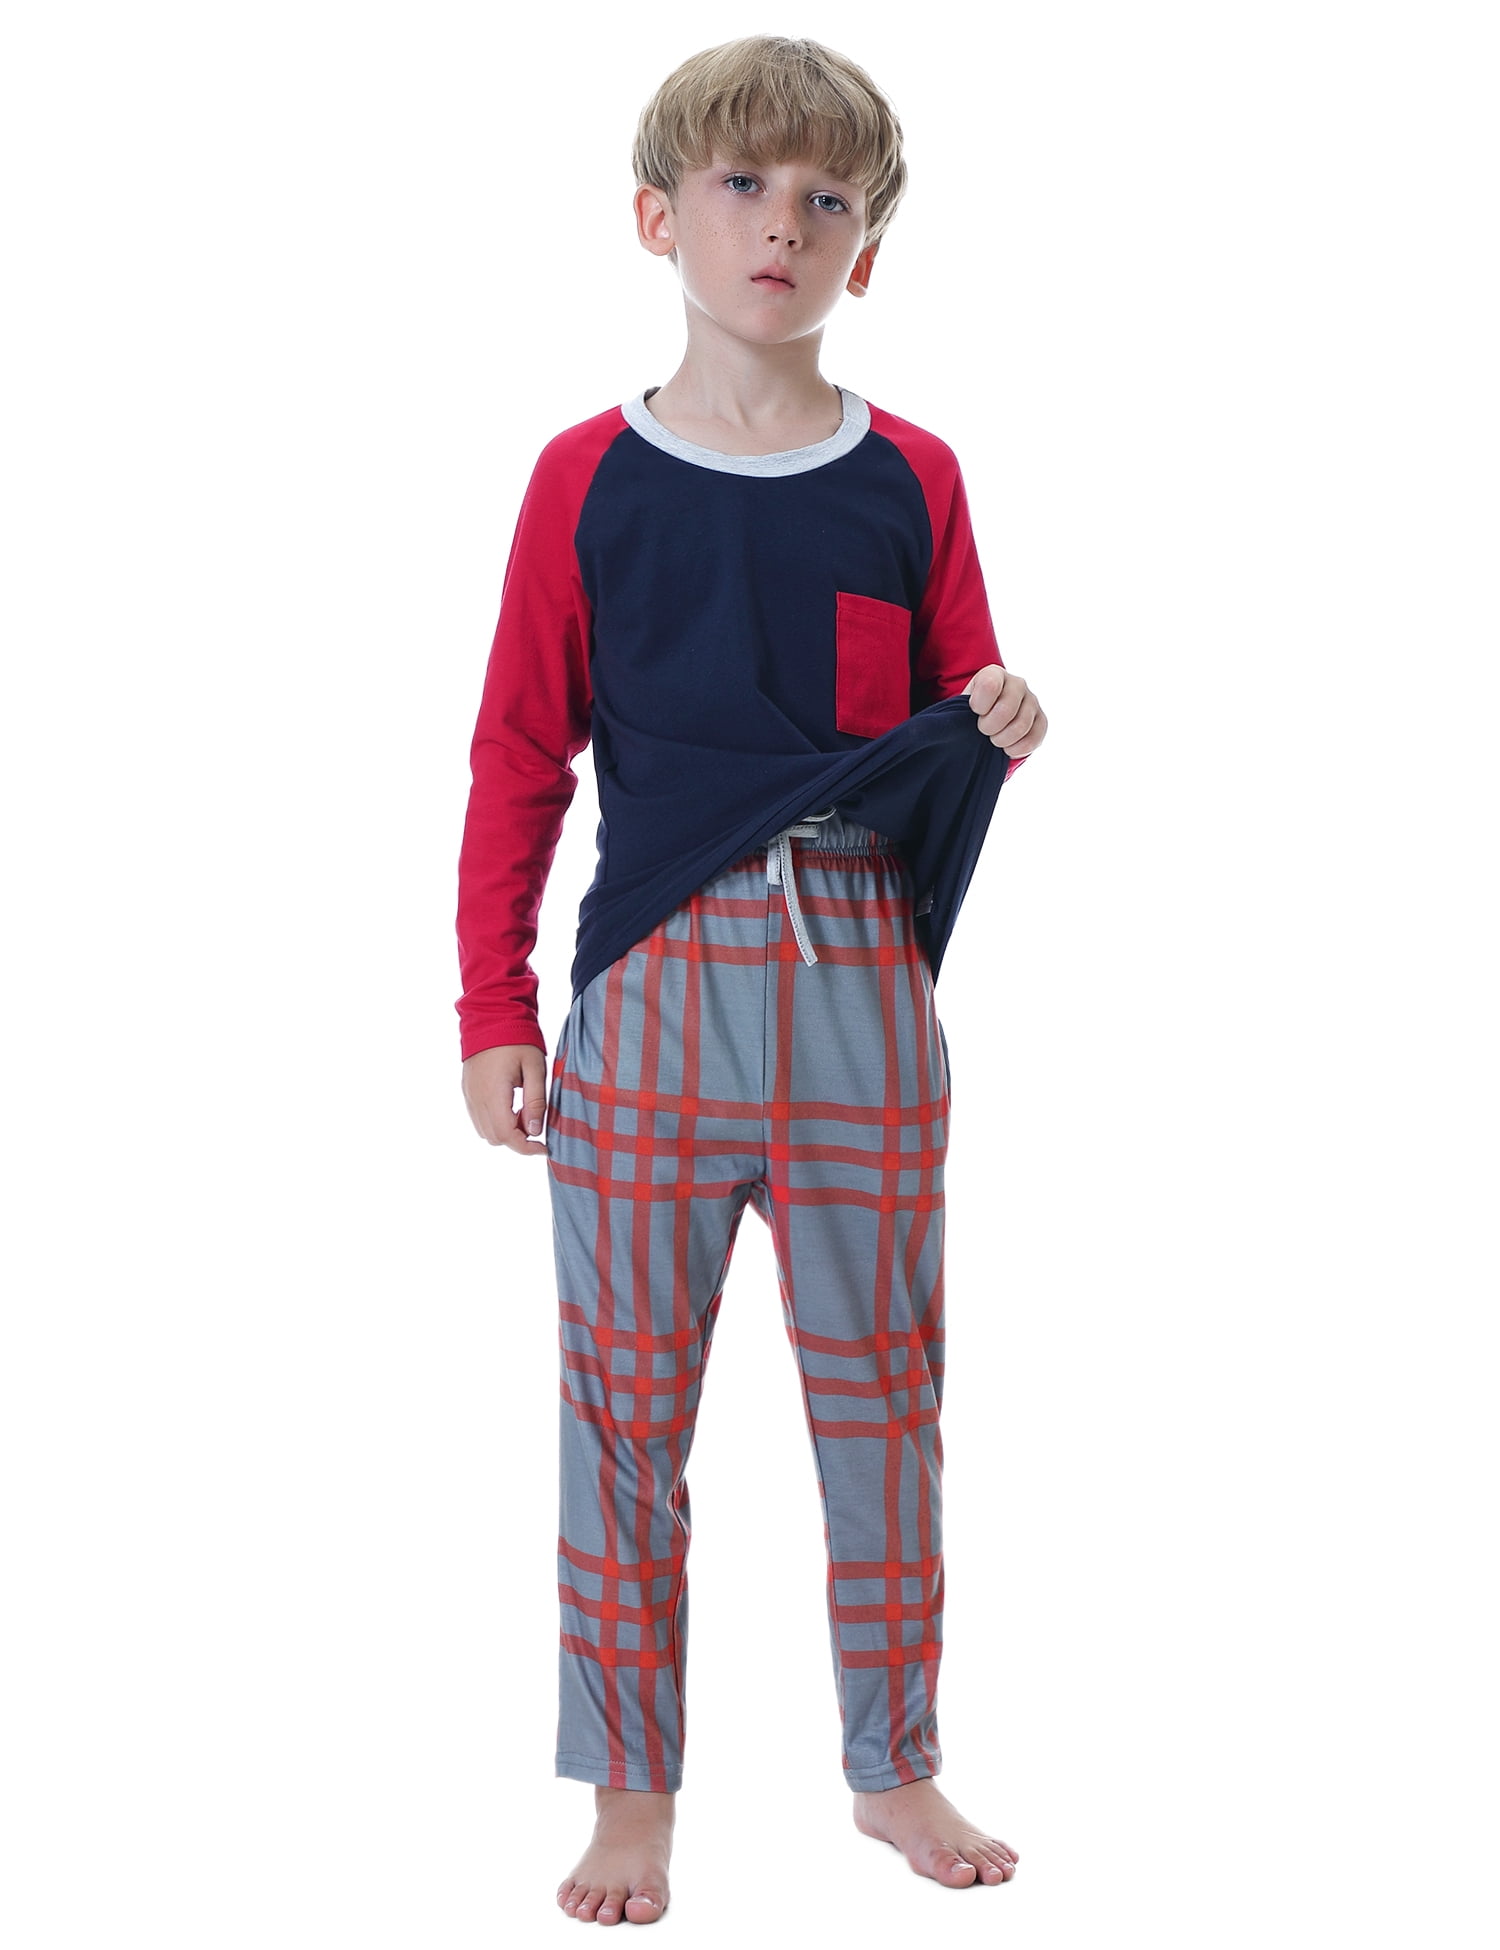 ROBLOX Children Pajamas Sets Kids Sleepwear suit Sleeved T-Shirts Trousers  Boy clothes Pj's Infant pijama Fashion Tops Pant